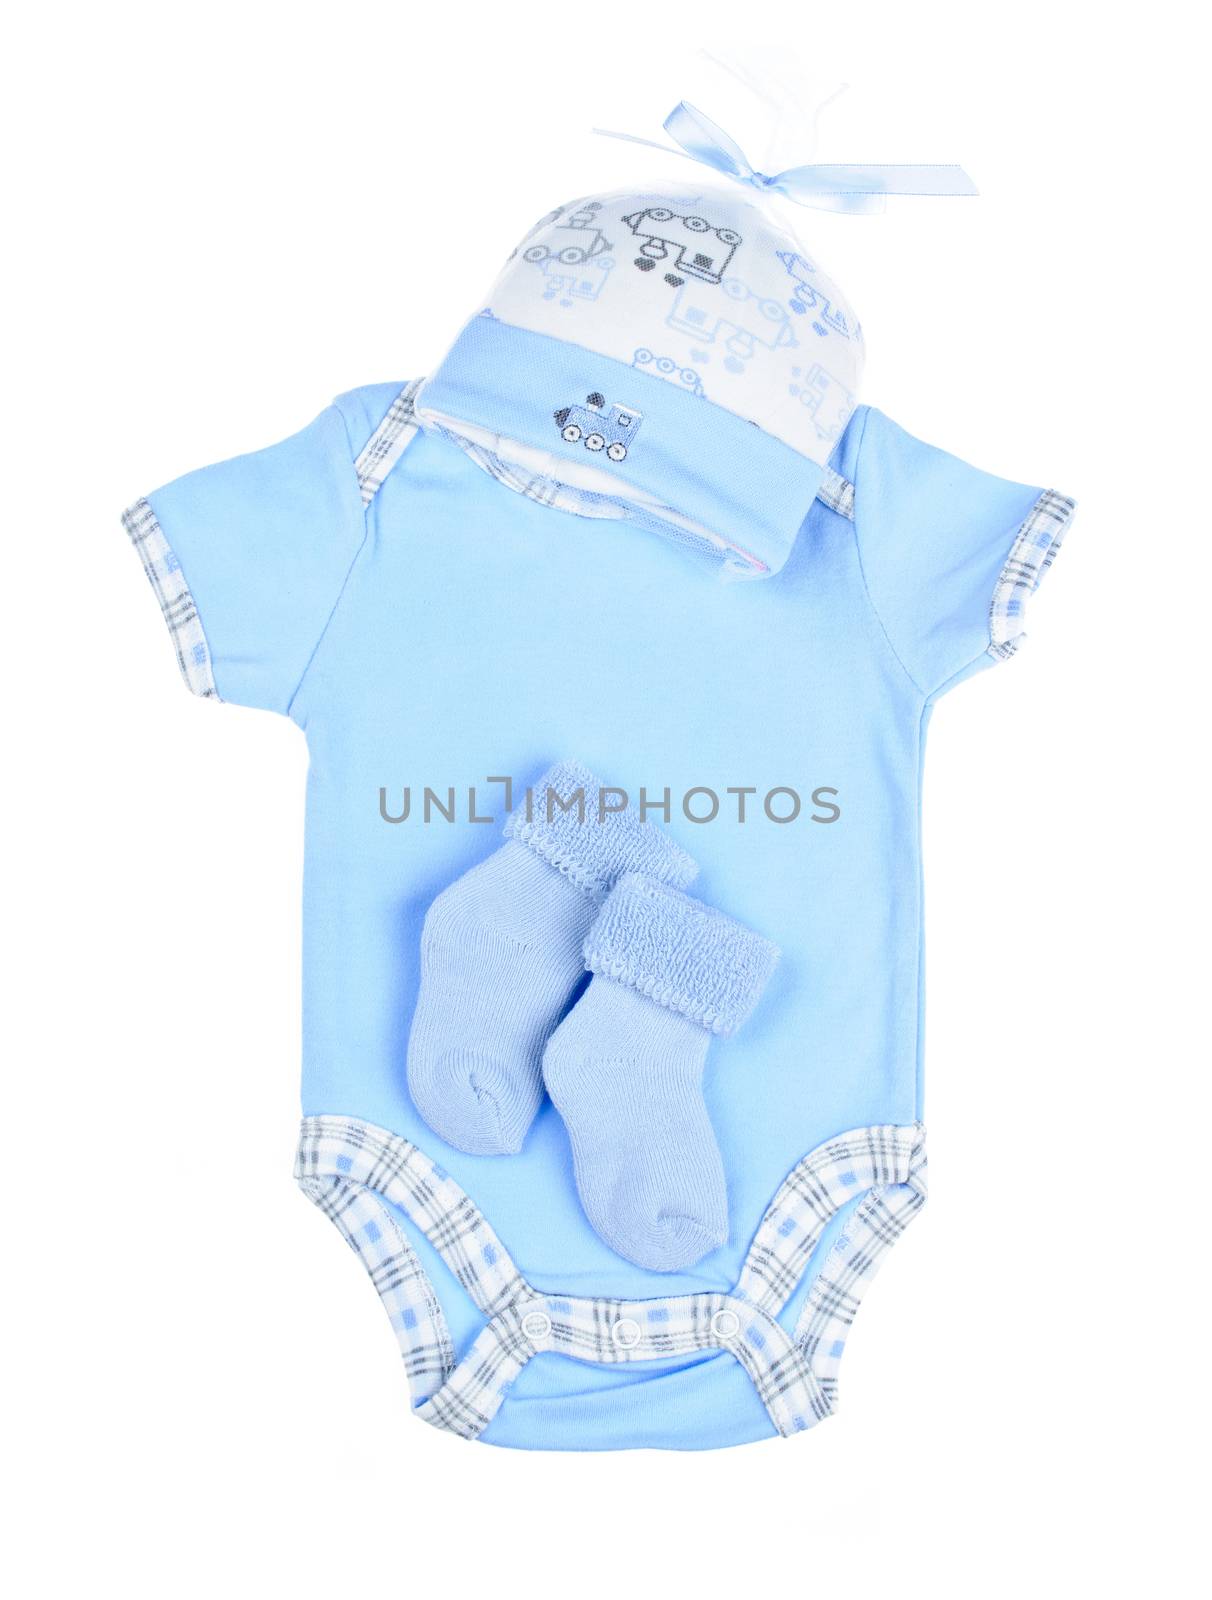 Blue infant boy clothing for baby shower isolated on white background